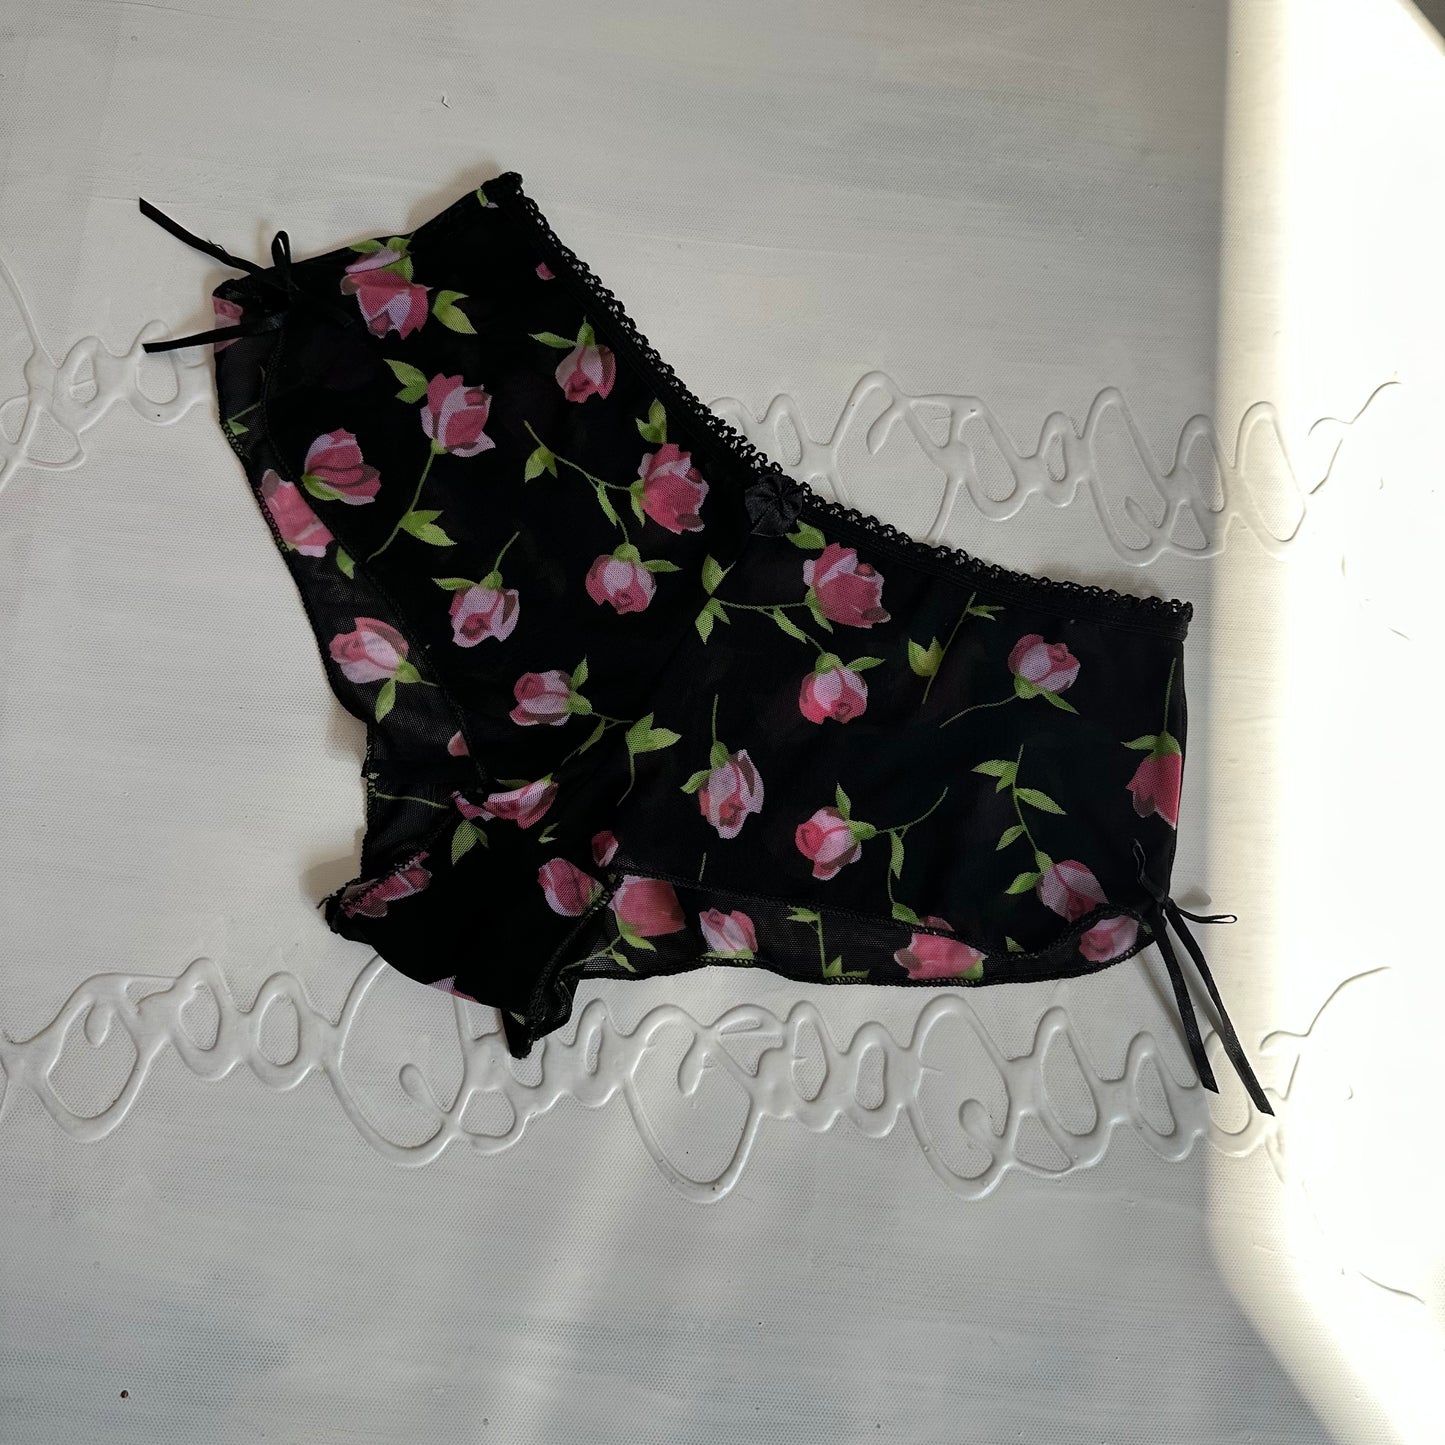 DAINTY DROP | black mesh floral pants - small